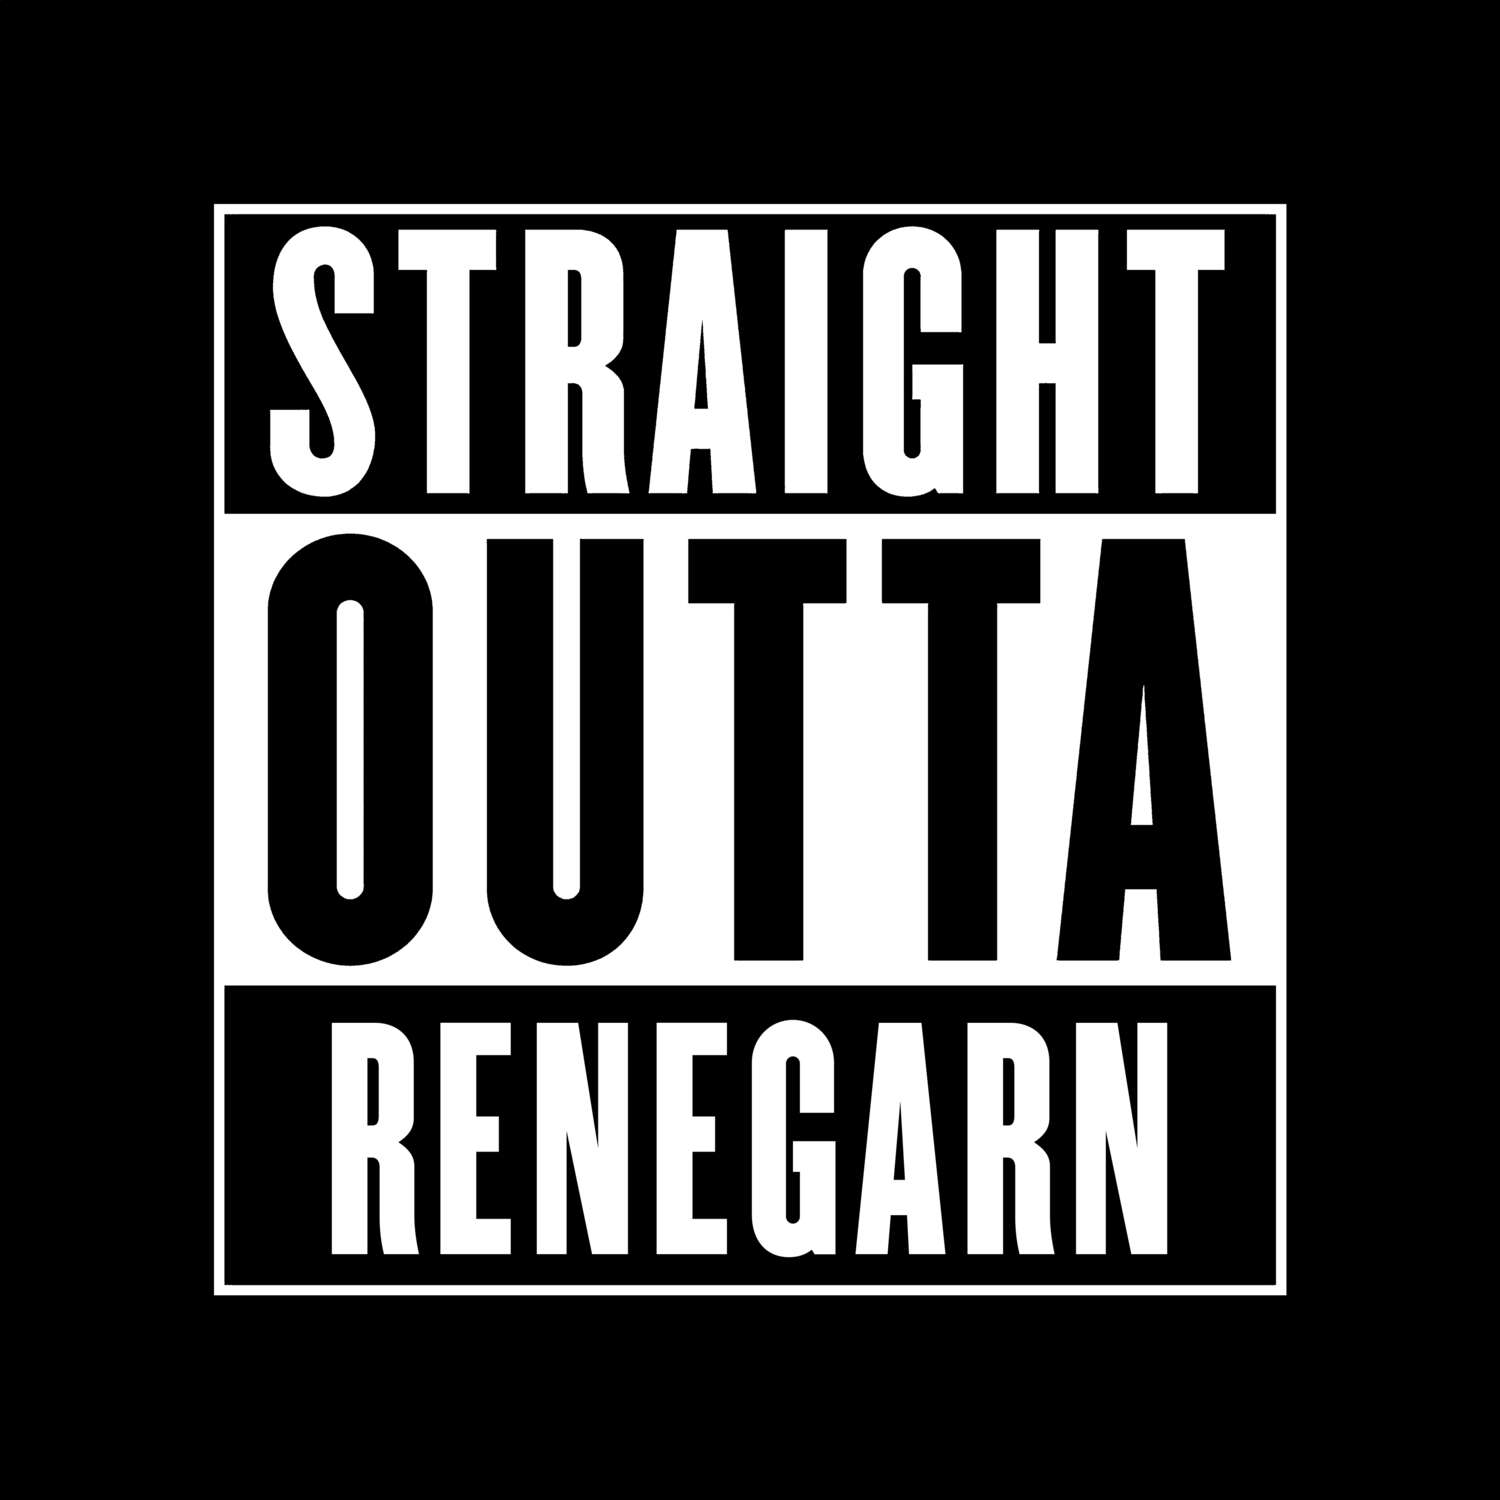 Renegarn T-Shirt »Straight Outta«